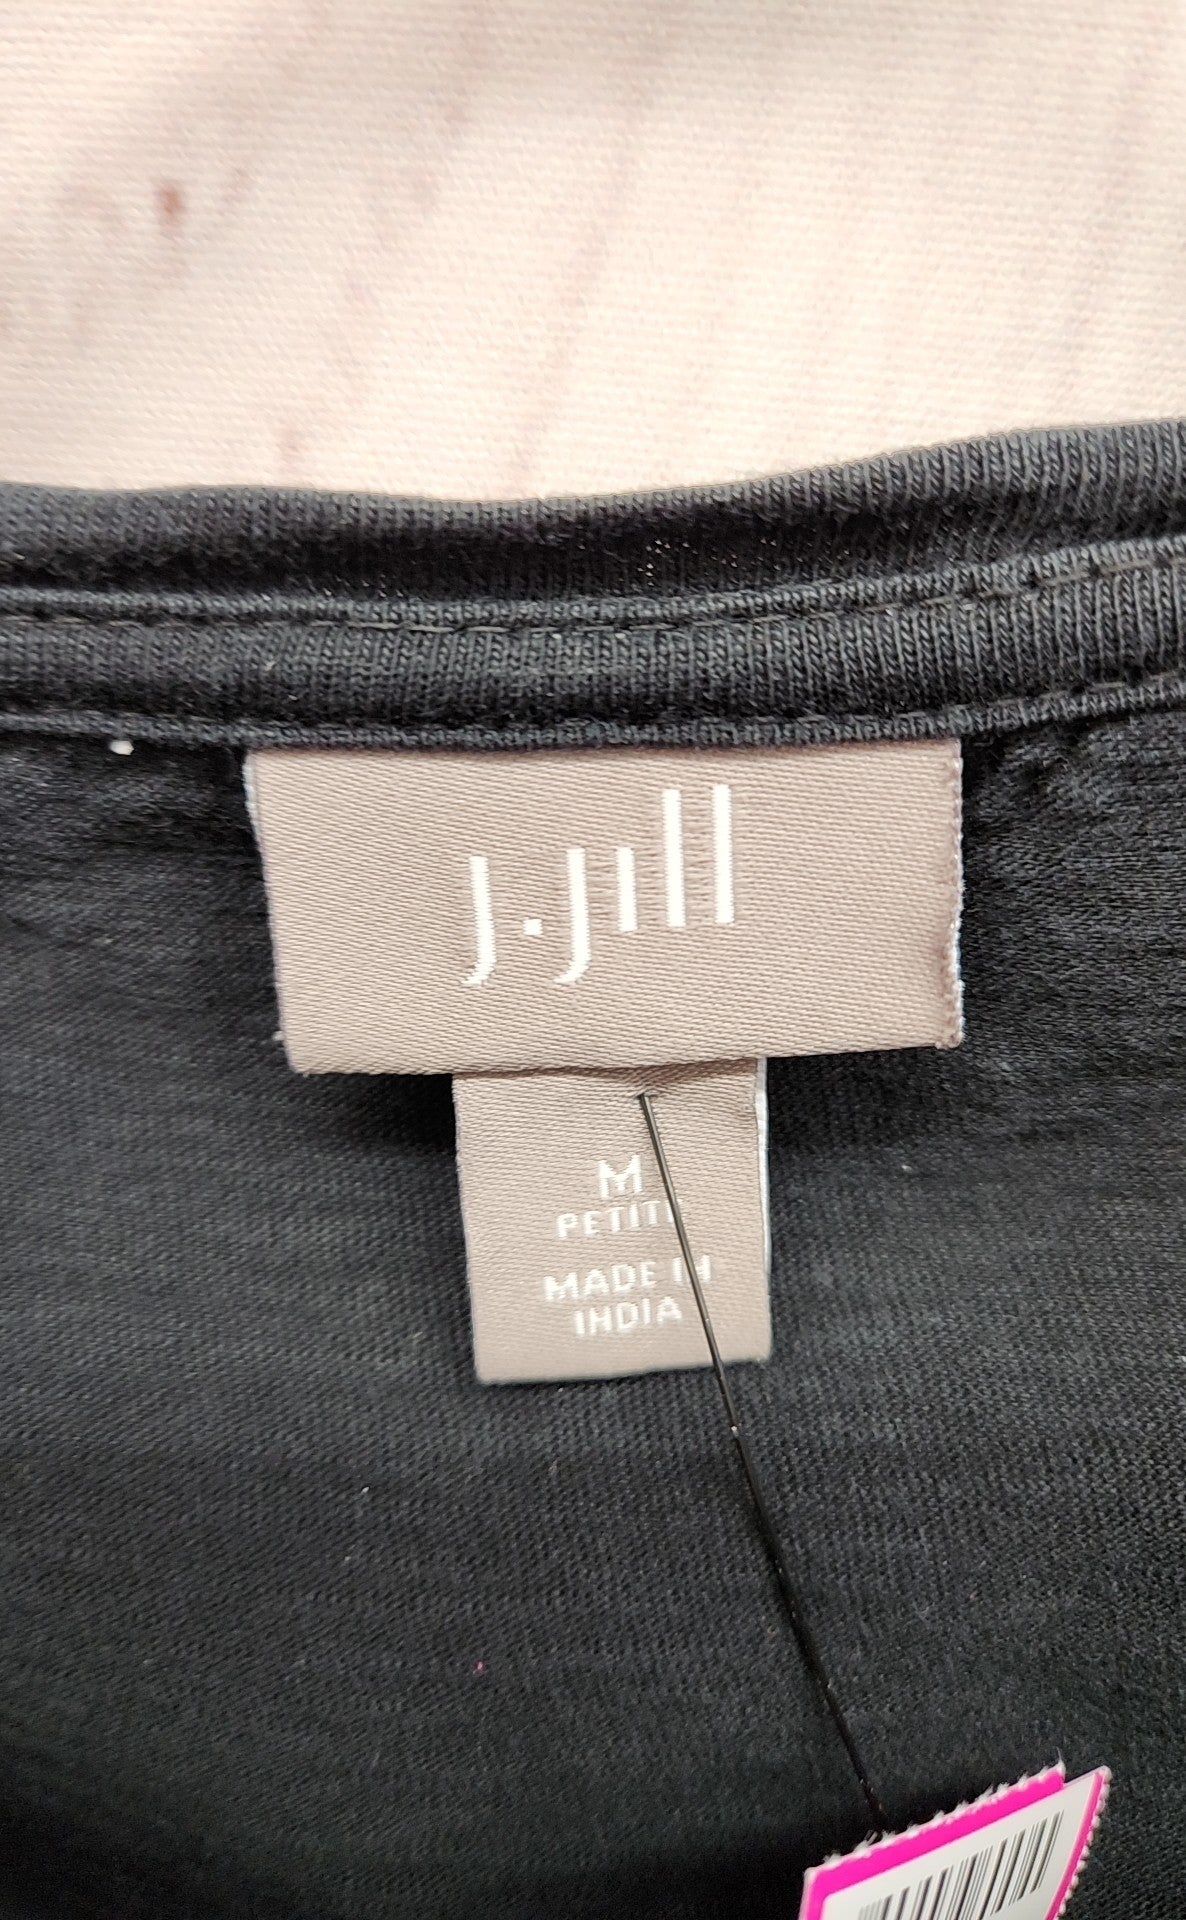 J Jill Women's Size M Petite Black 3/4 Sleeve Top